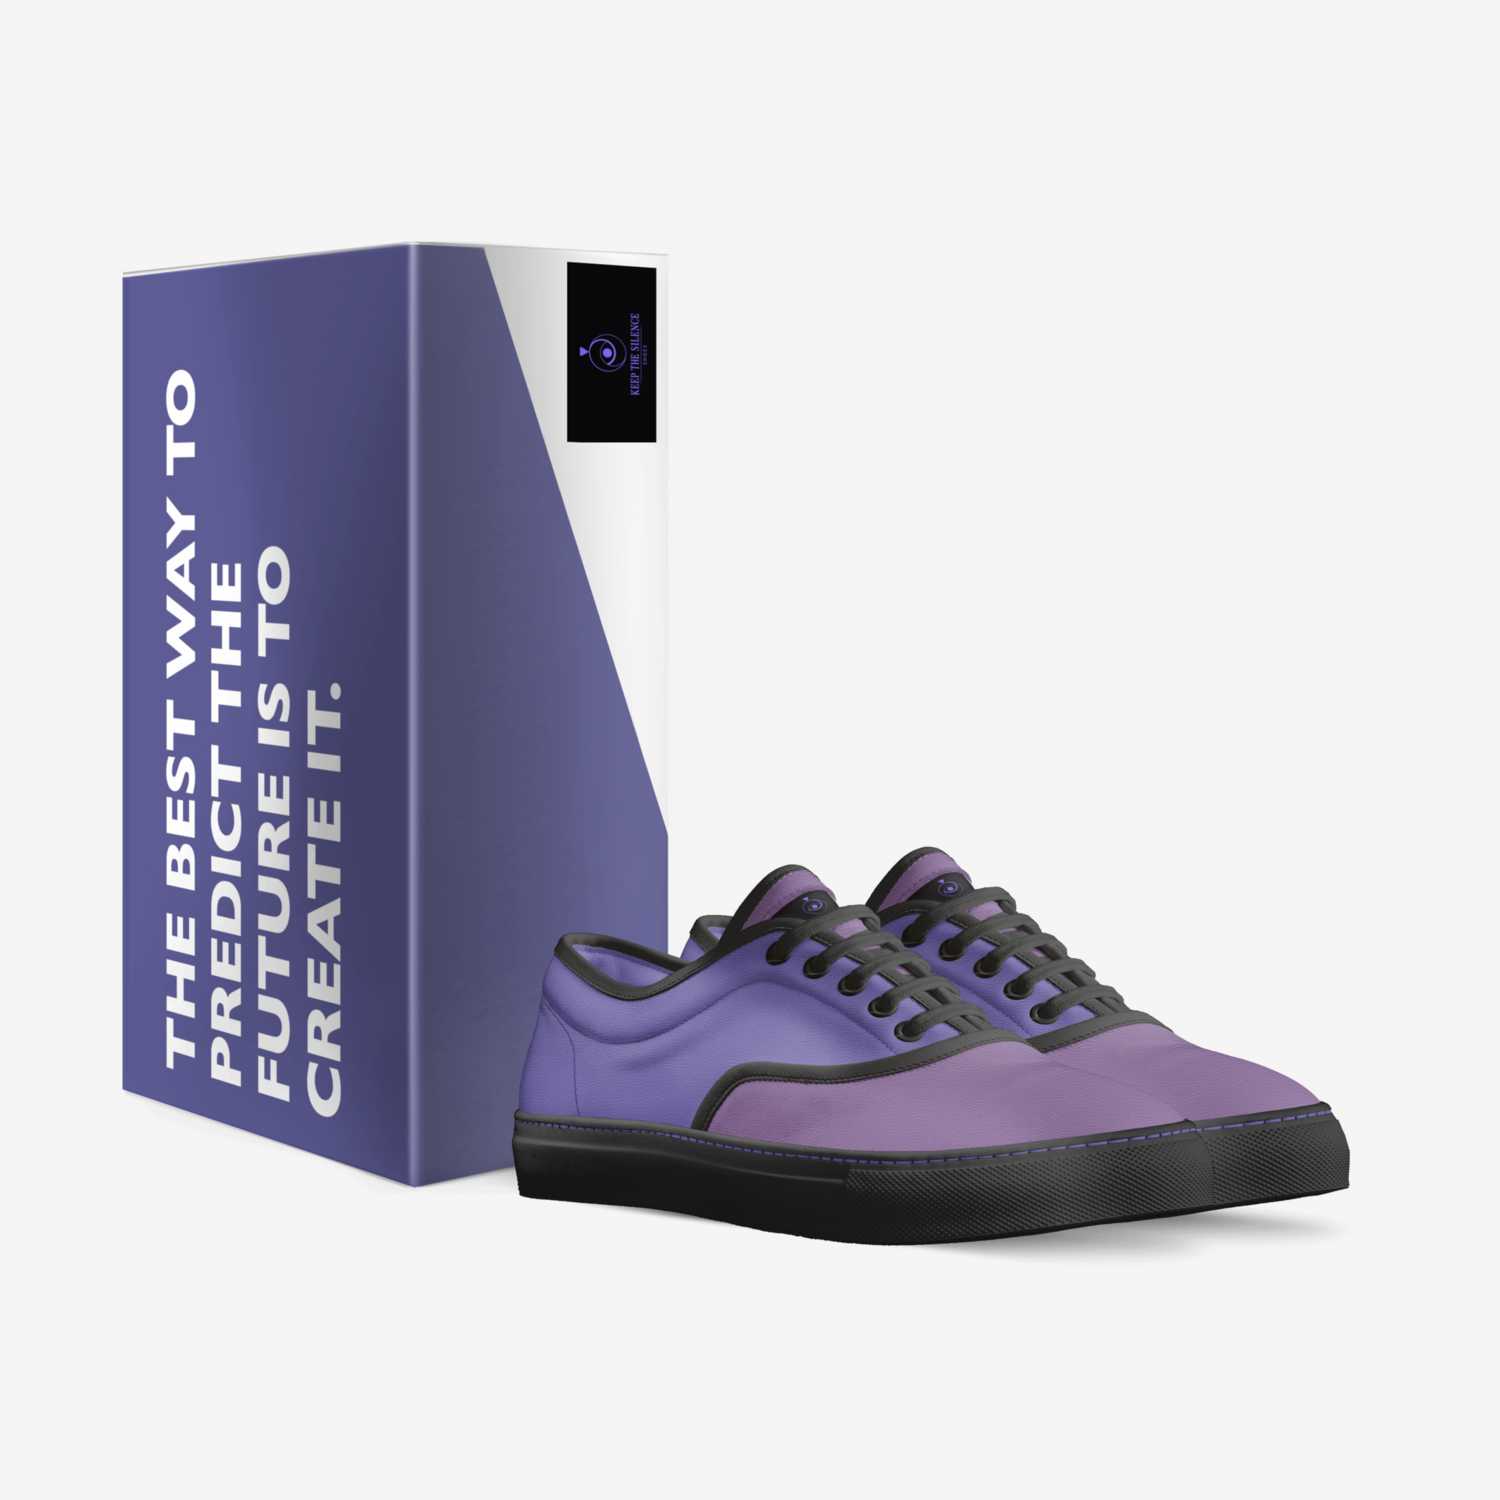 Keep The Silence custom made in Italy shoes by Erika Kundavičiūtė | Box view